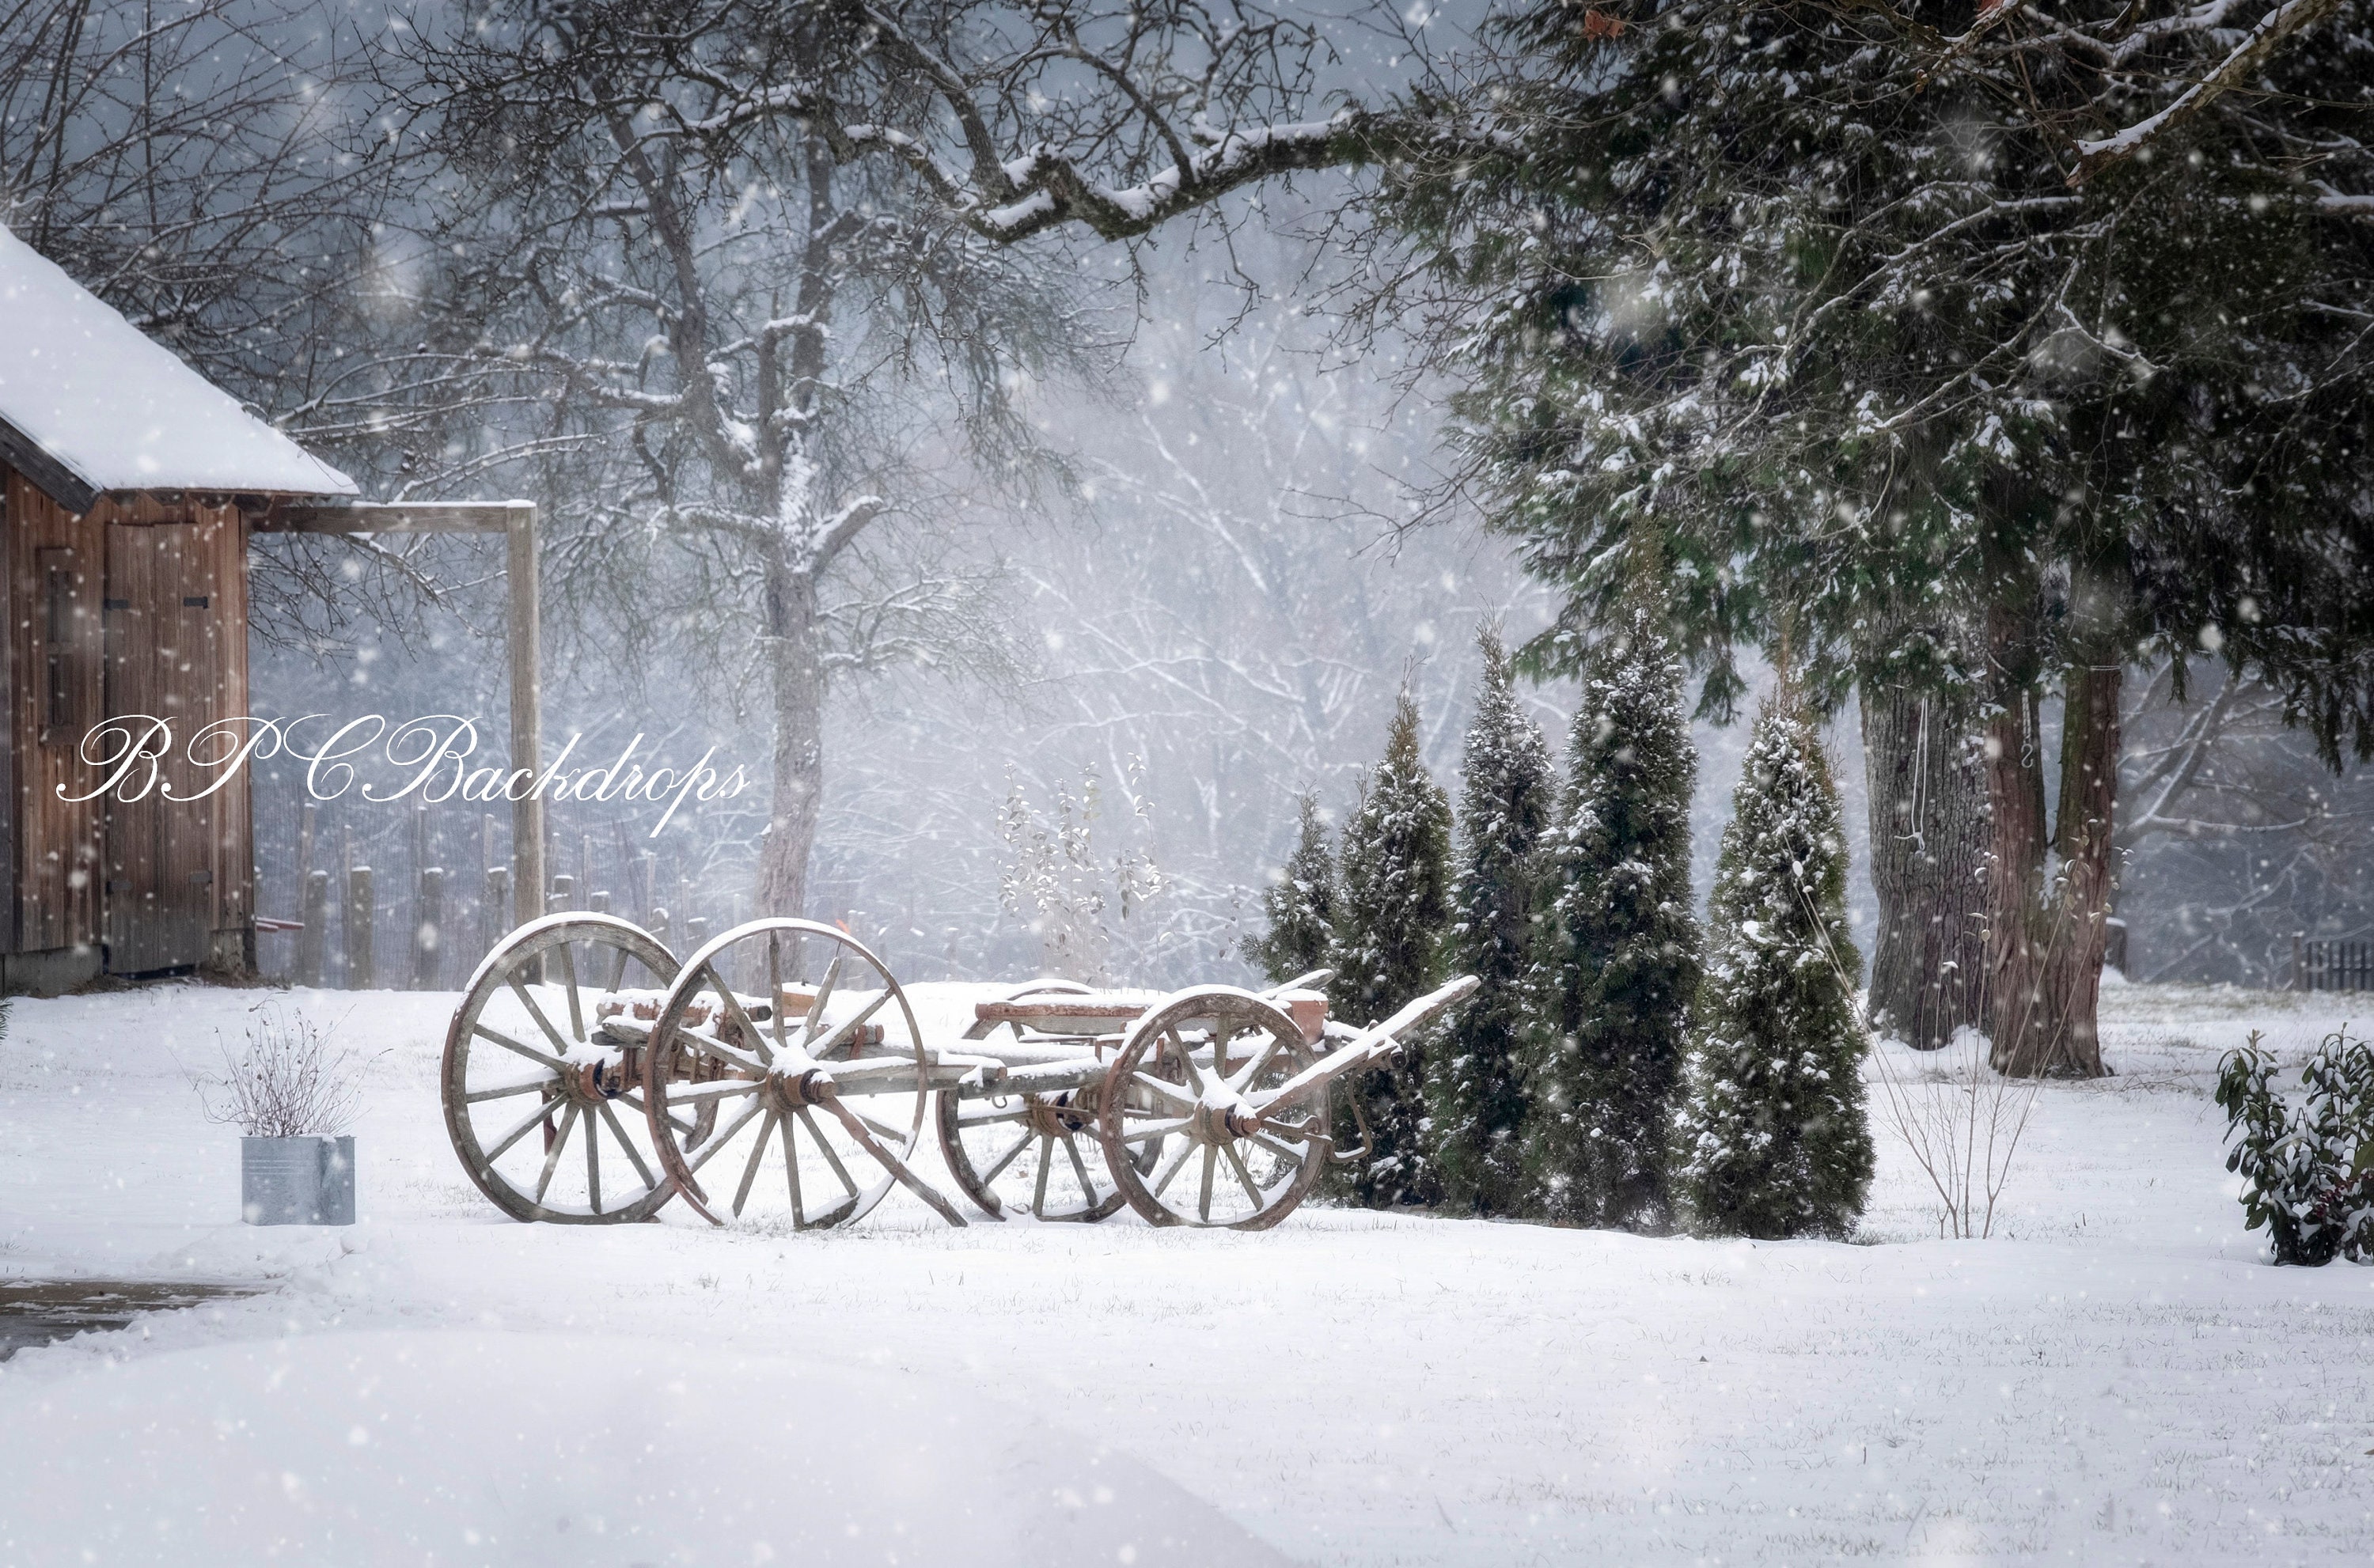 winter wonderland photography